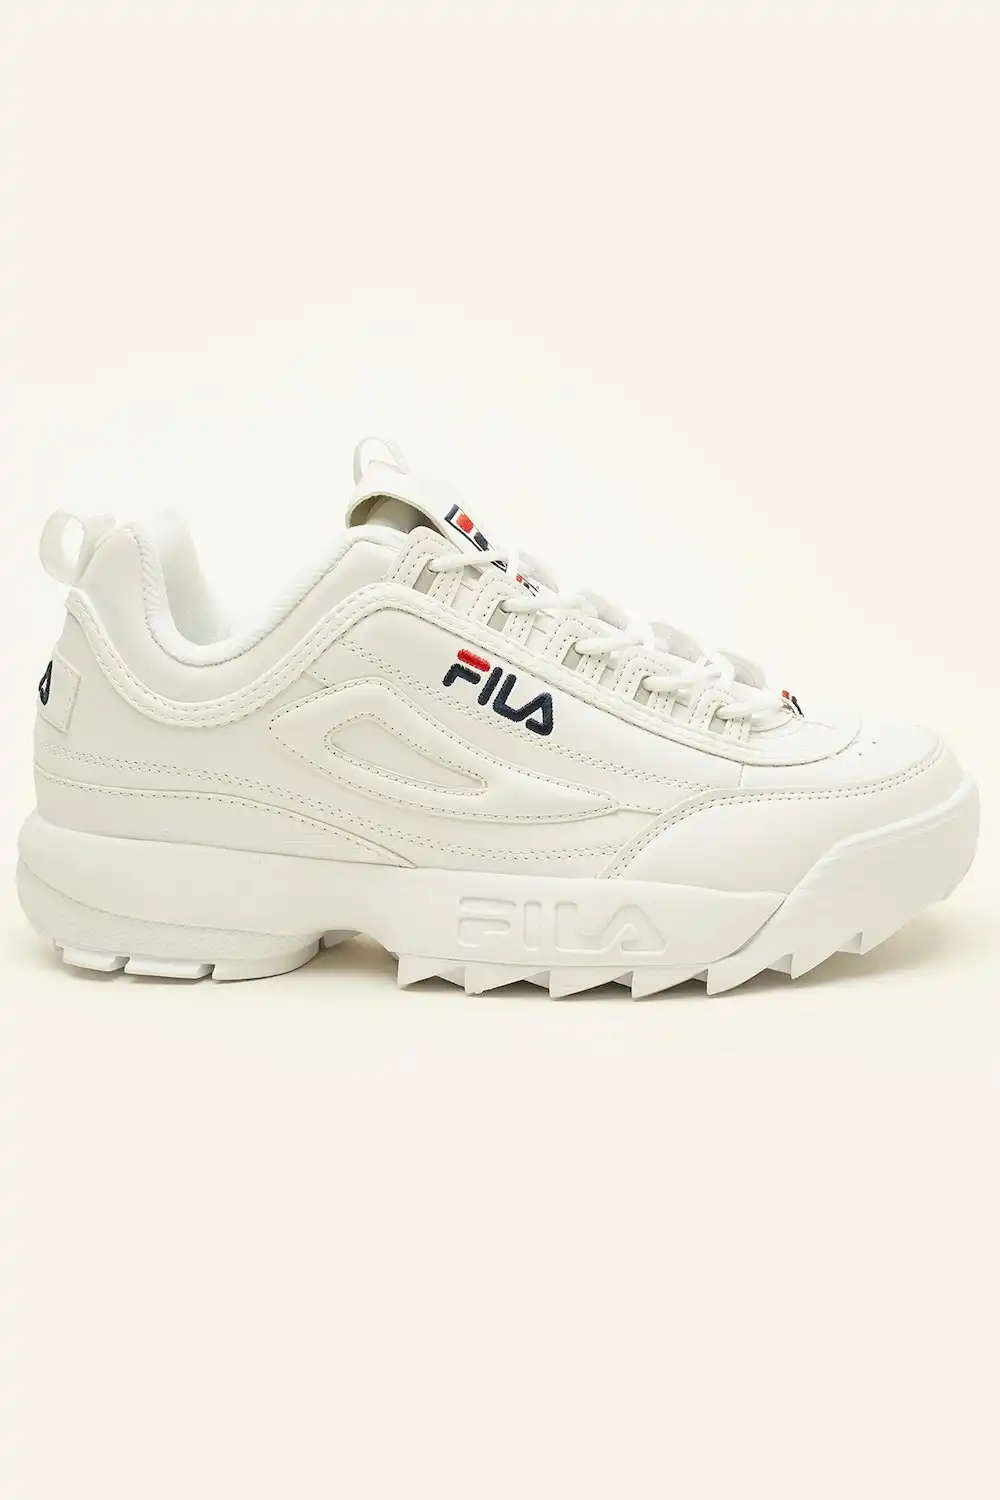 Fila Men's Disruptor II Premium Shoes White / Navy / Red